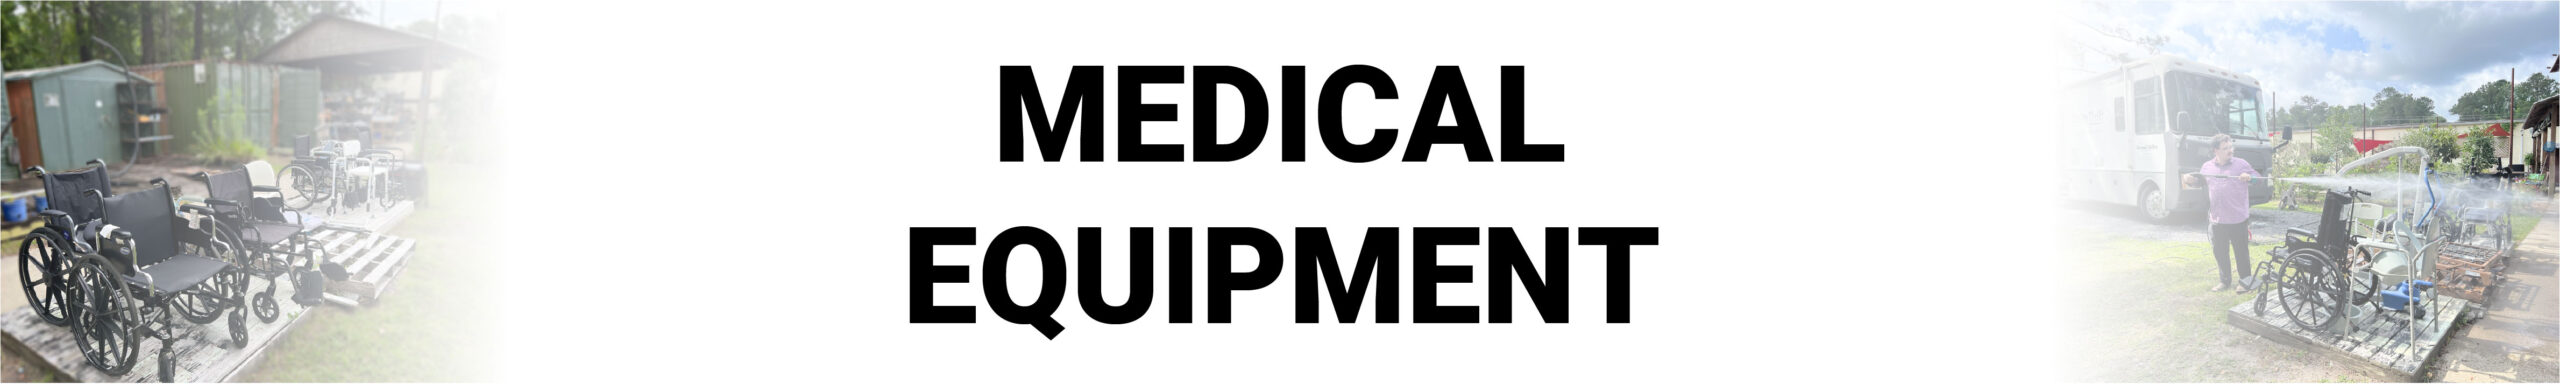 Medical Equipment Banner